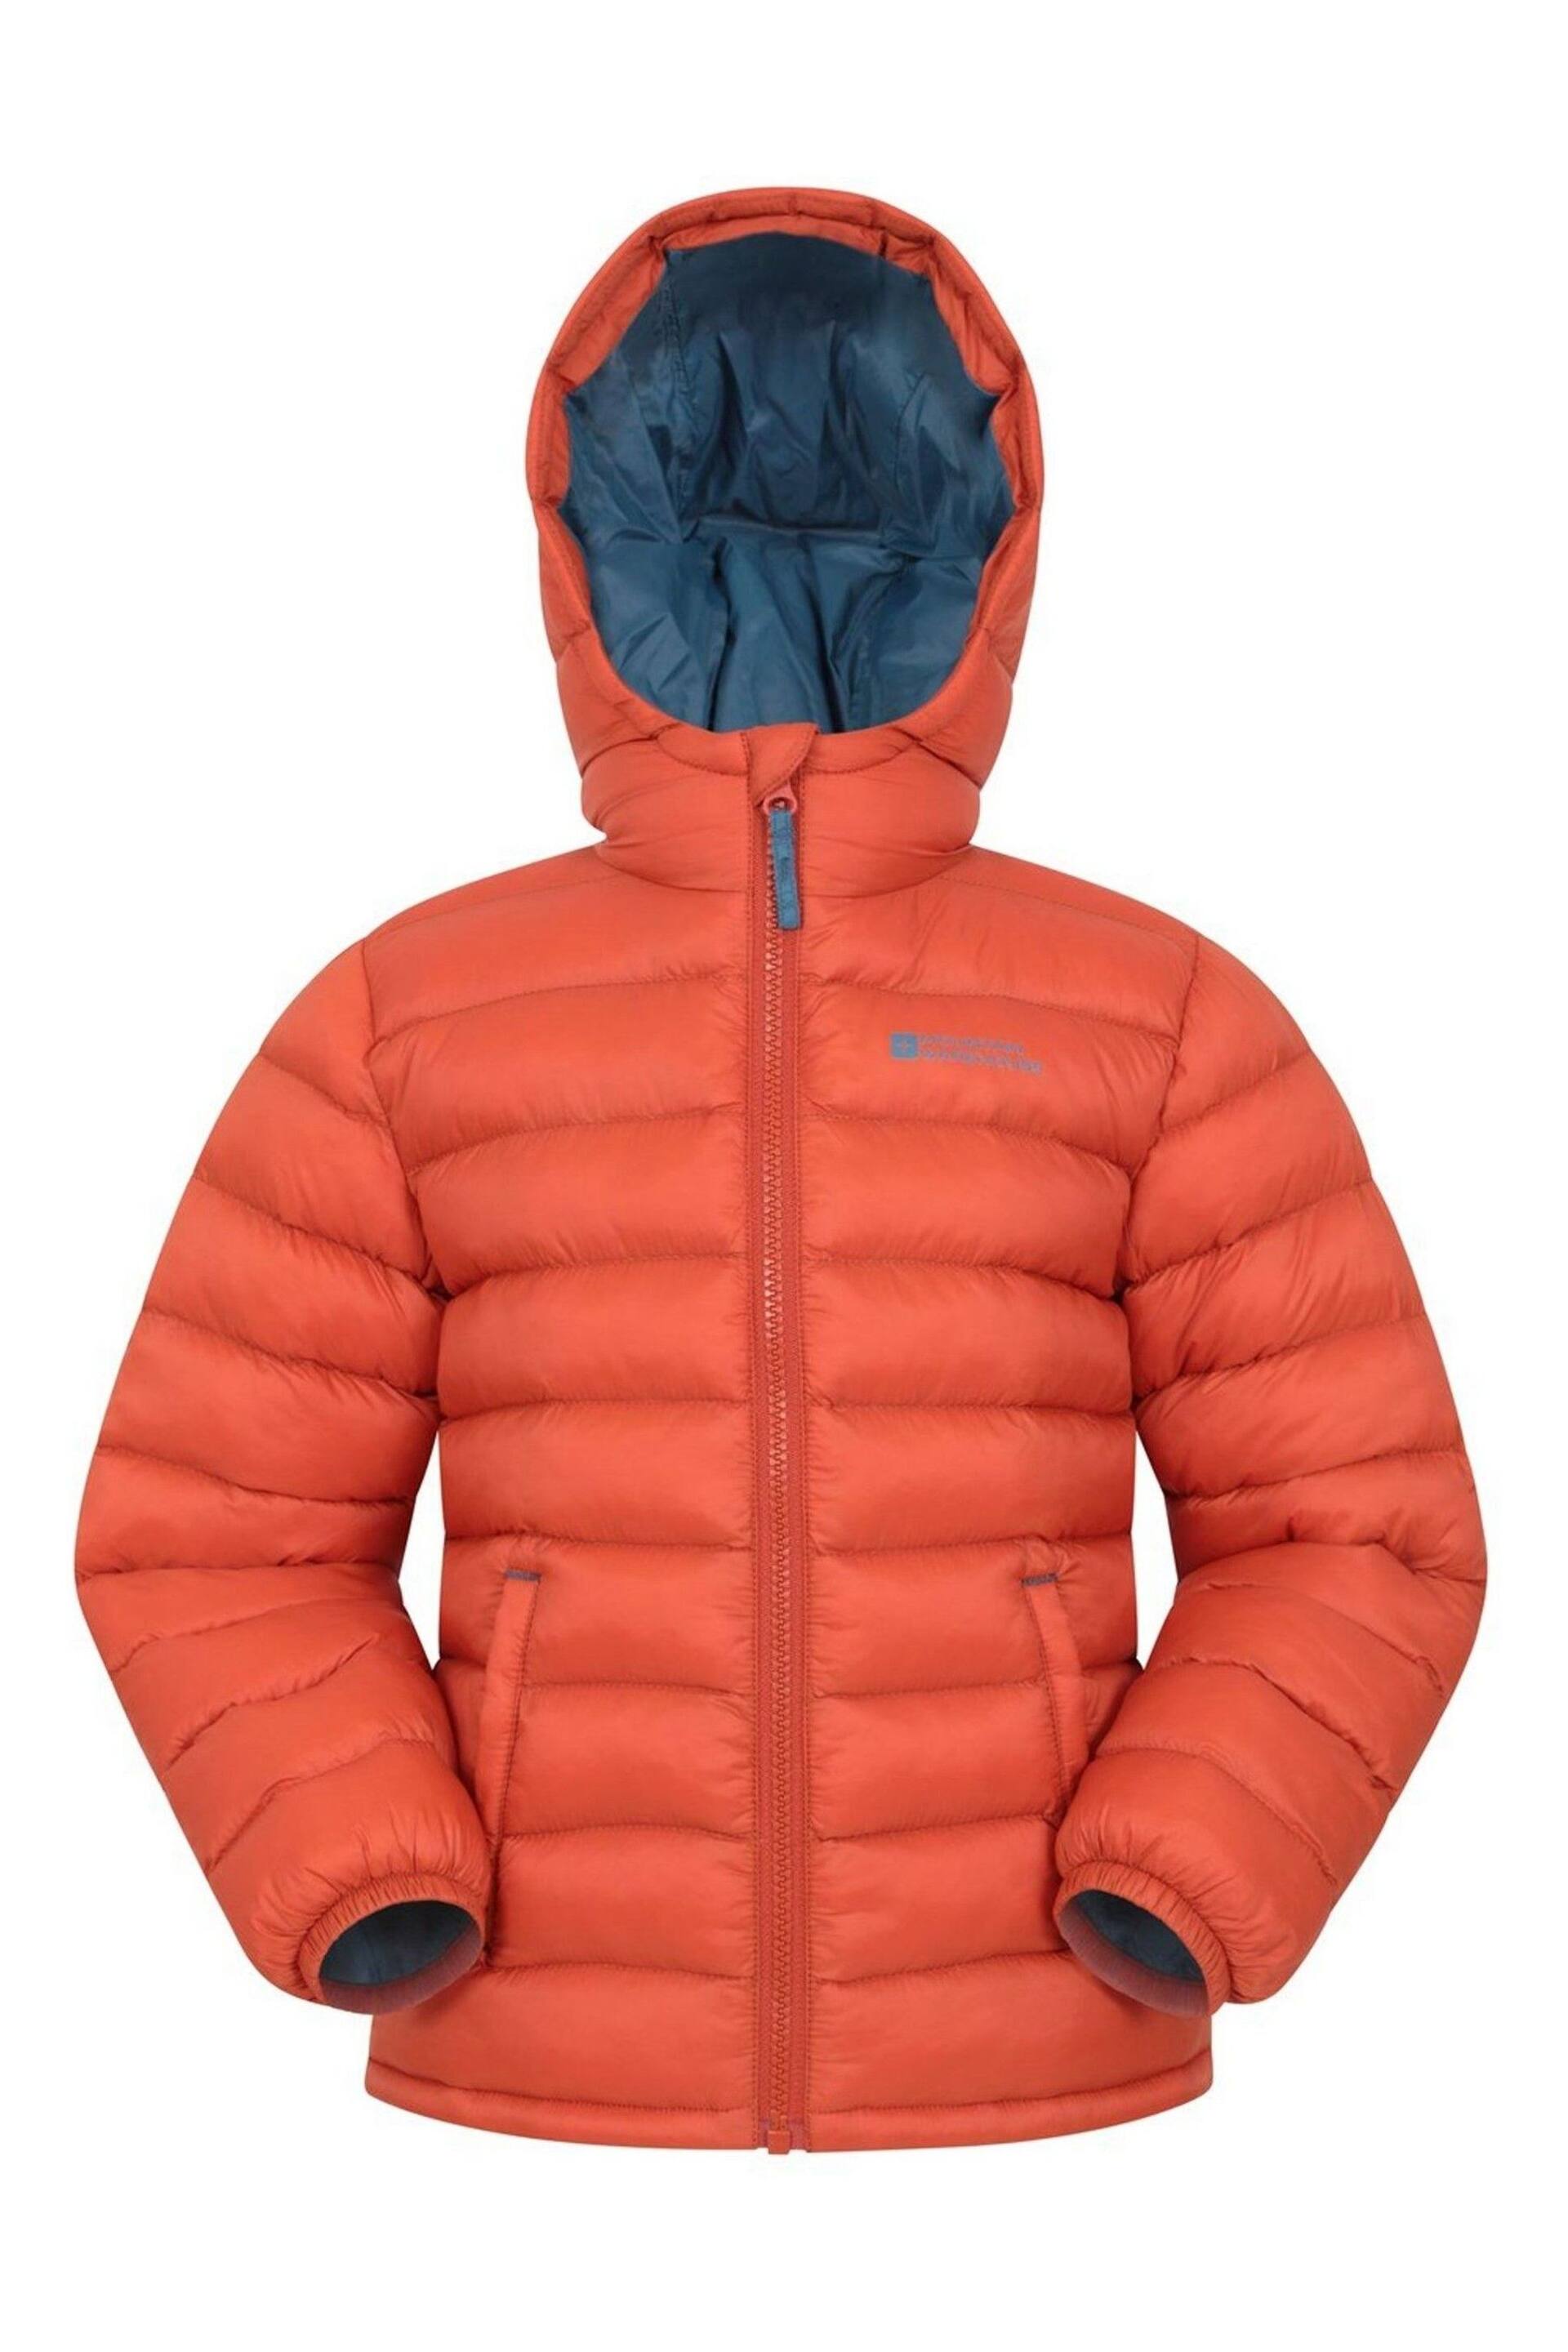 Mountain Warehouse Orange Seasons Water Resistant Padded Jacket - Image 1 of 2